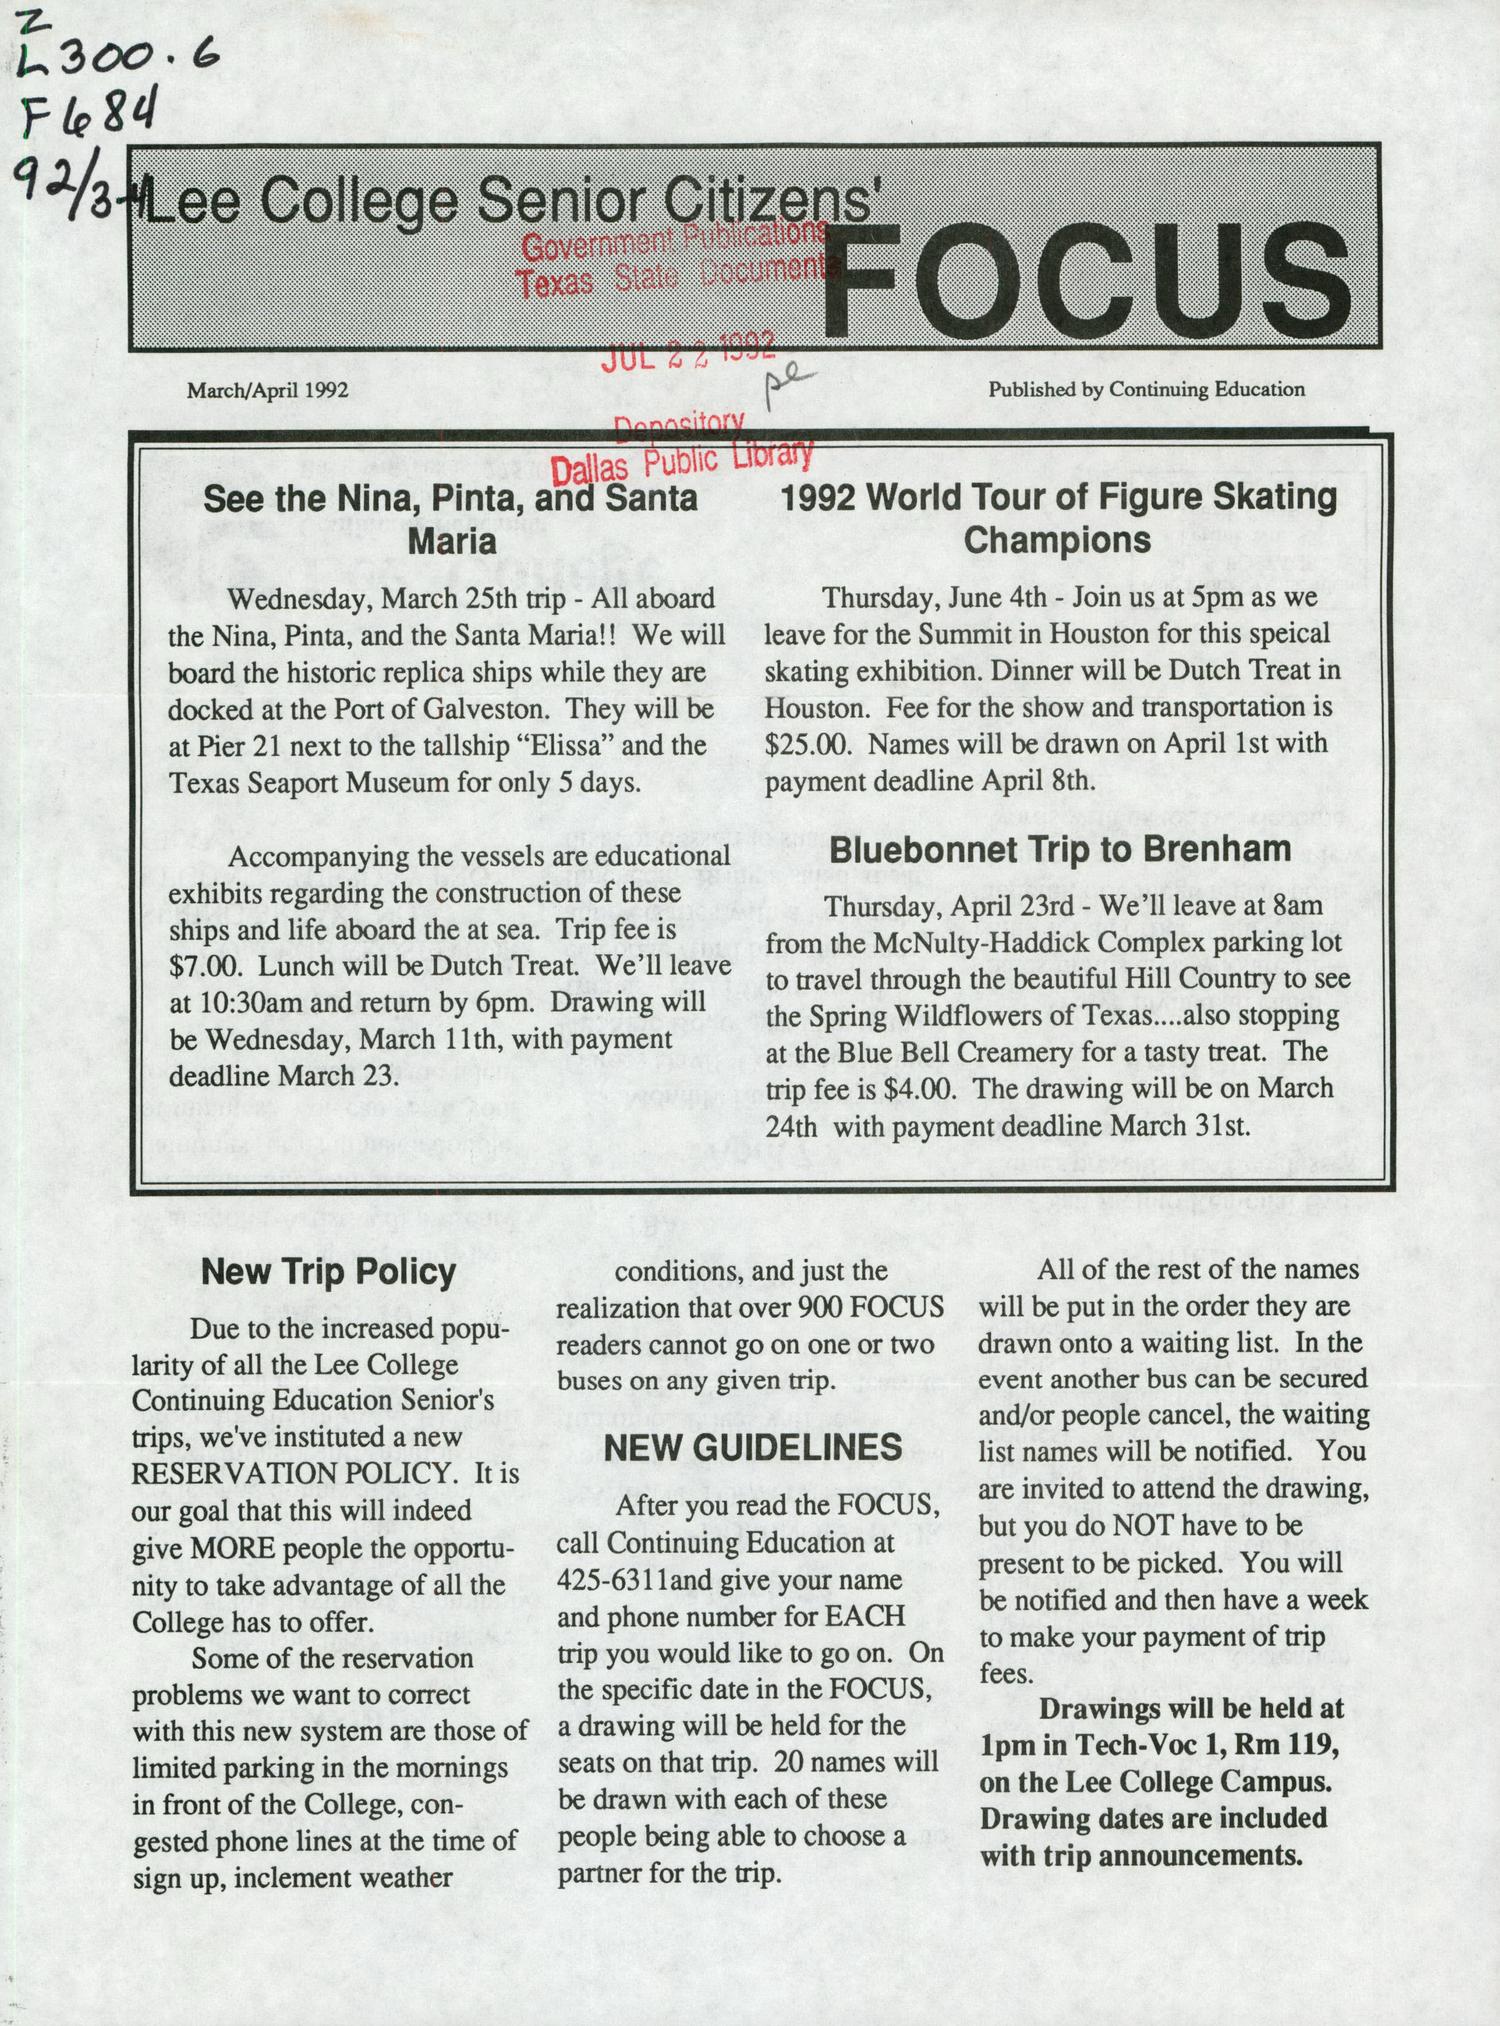 Lee College Senior Citizens' Focus, March/April 1992
                                                
                                                    FRONT COVER
                                                